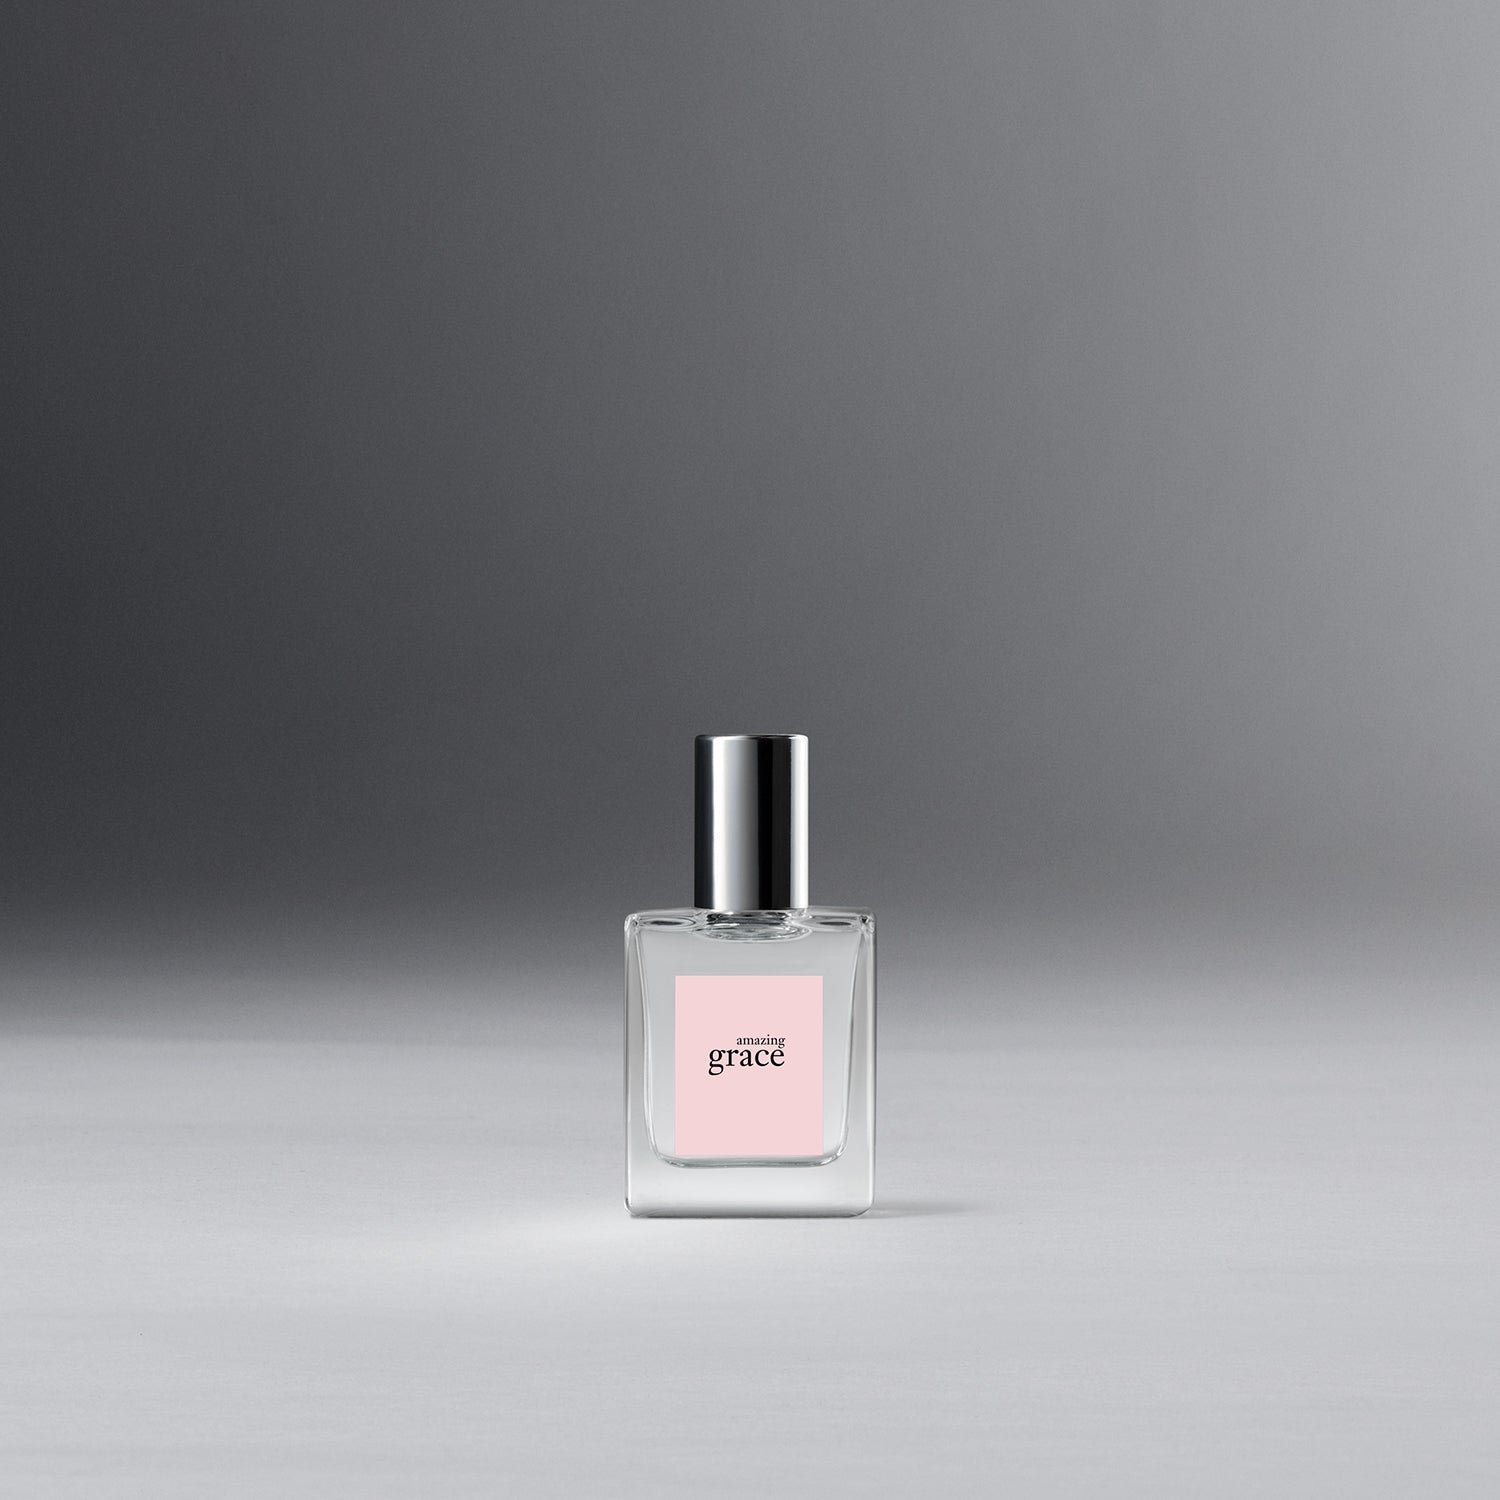 Give Eau Noire unisex fragrance - Holiday Gift Idea